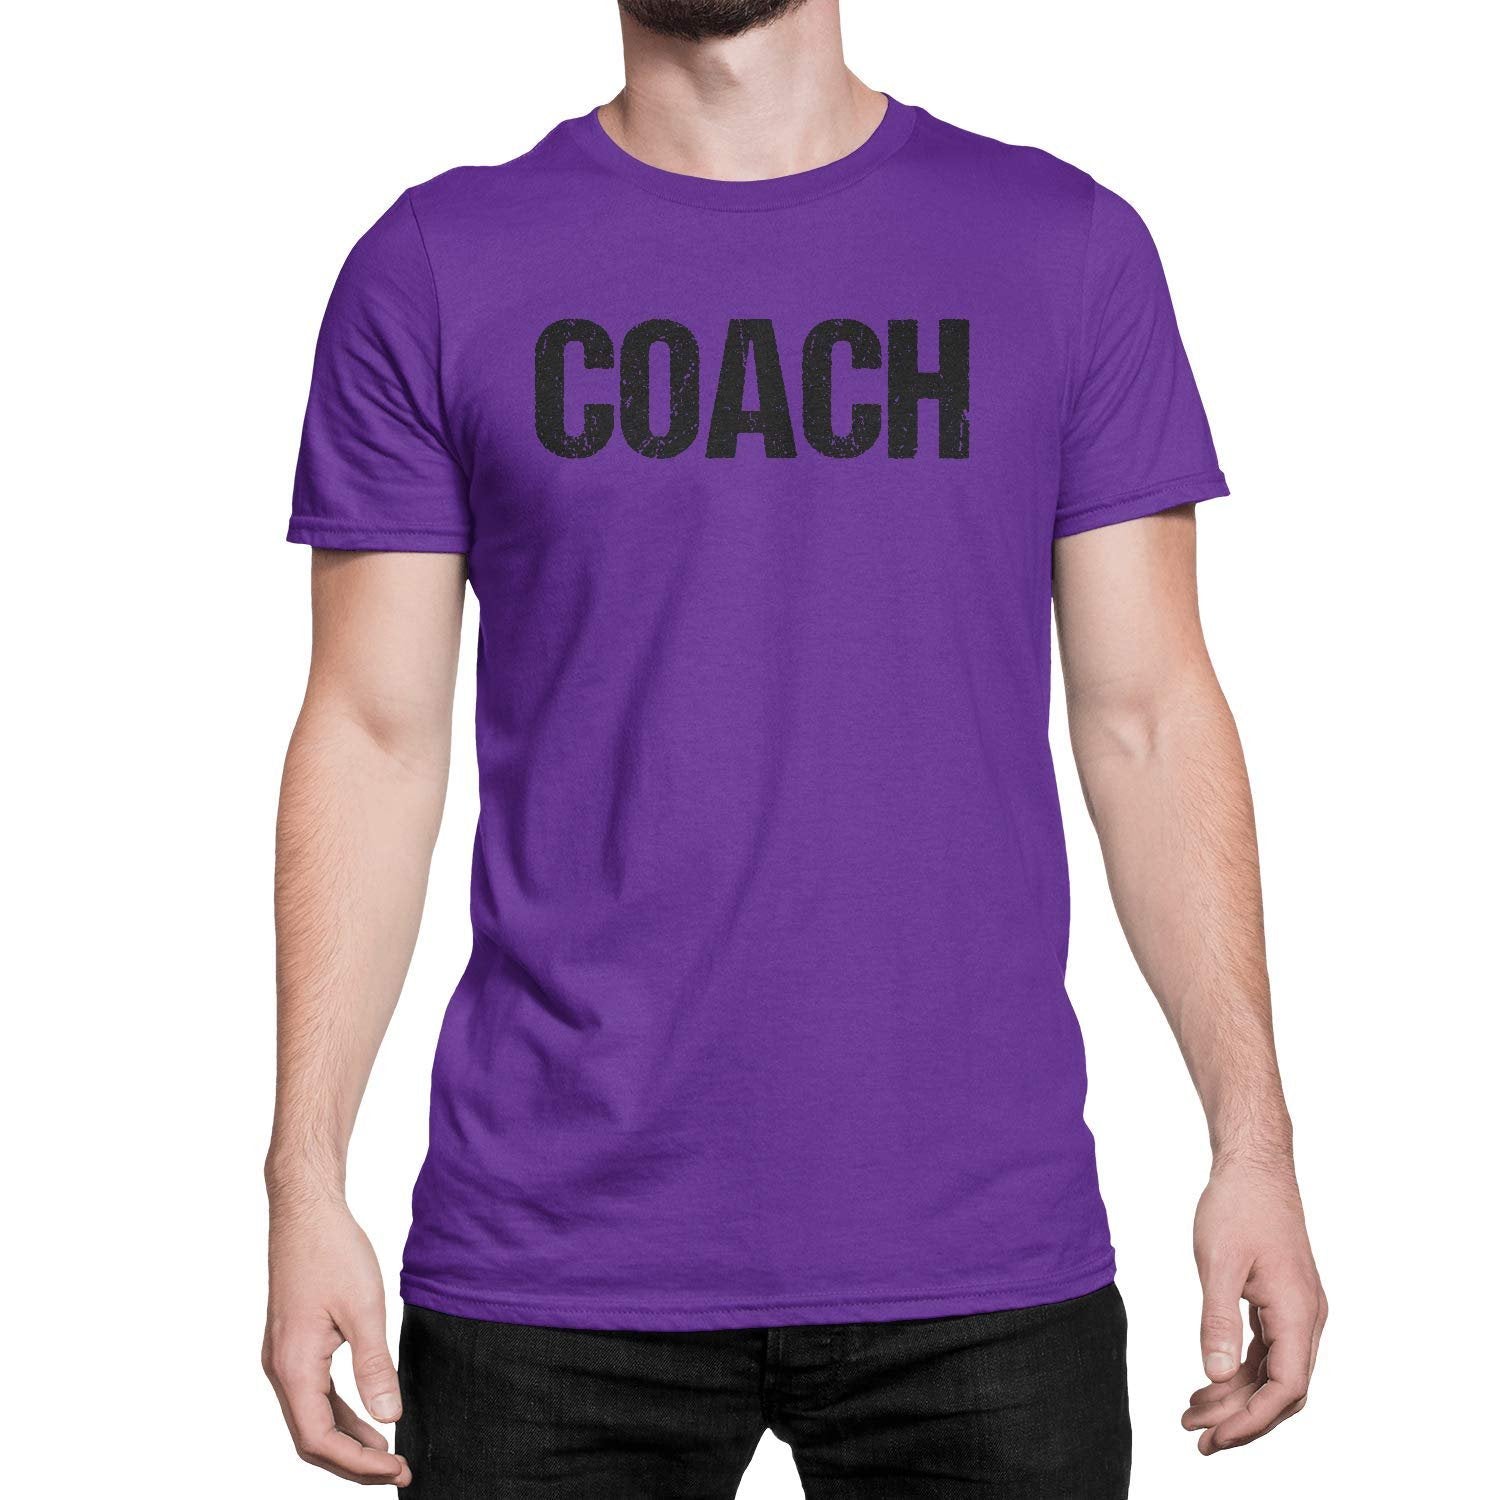 Coach T-Shirt Sports Coaching Tee Shirt (Purple & Black, Distressed)